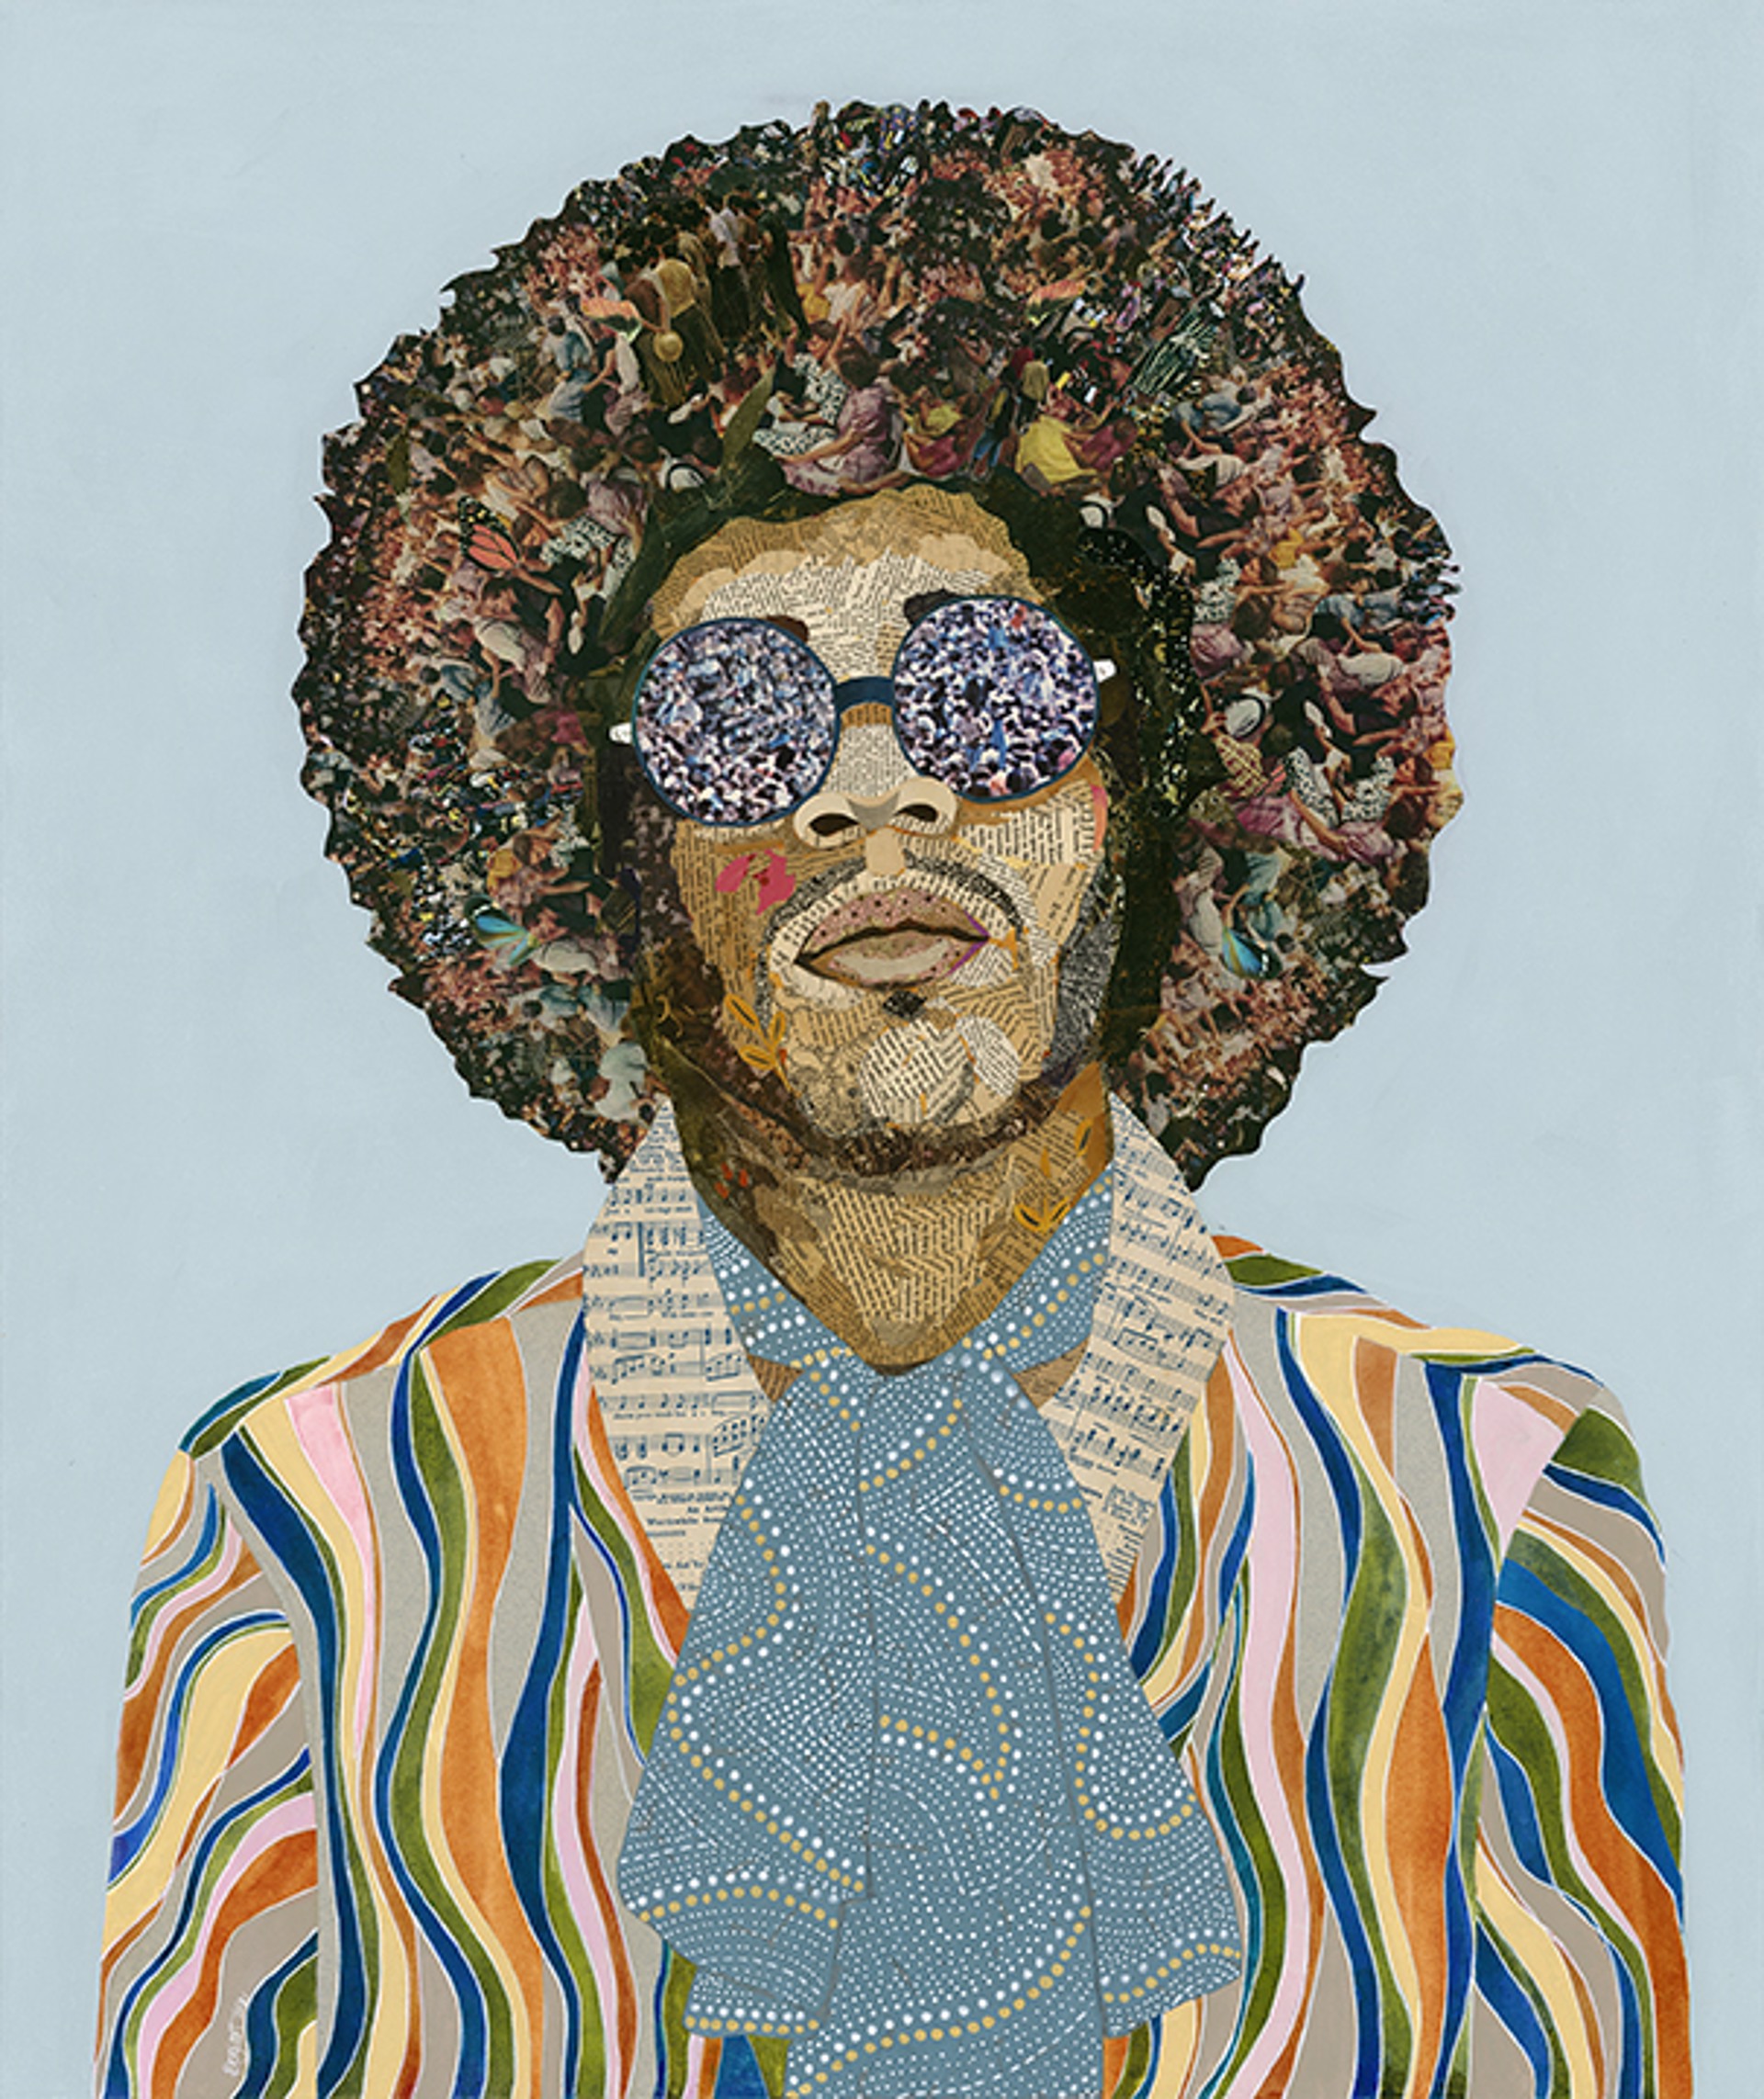 Jimi Hendrix 2 by Brenda Bogart - Prints